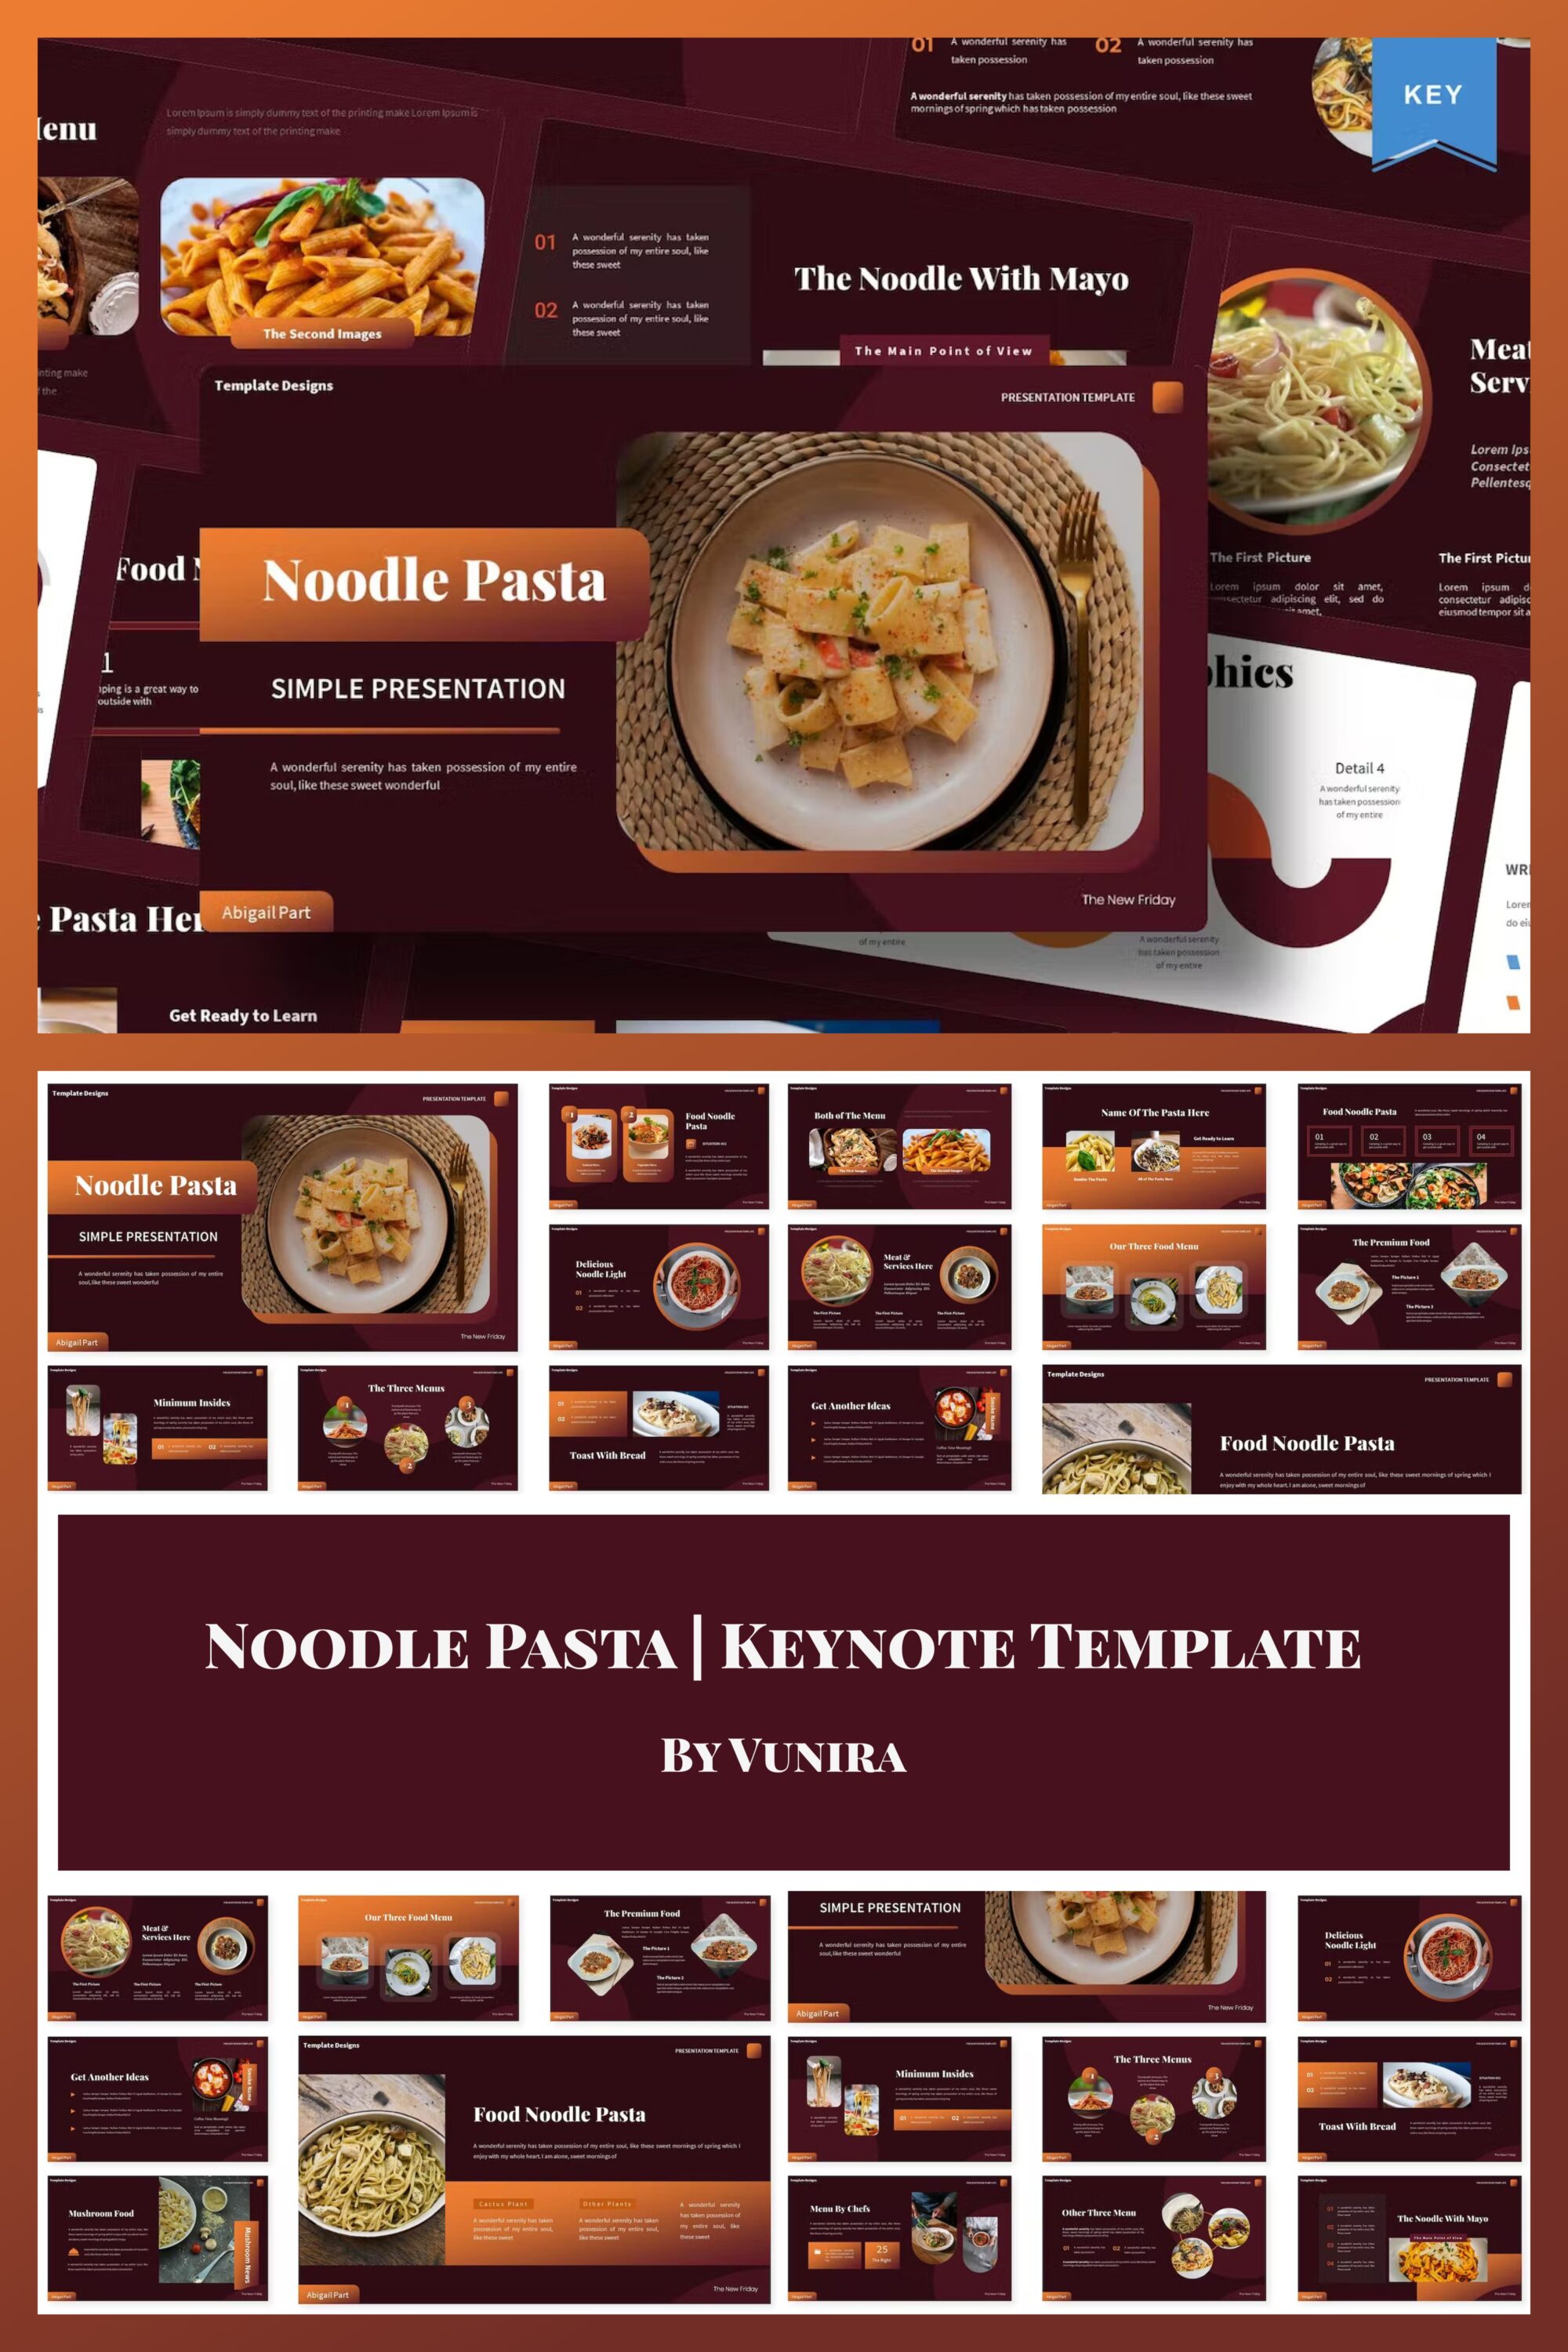 Noodle pasta keynote template of pinterst.